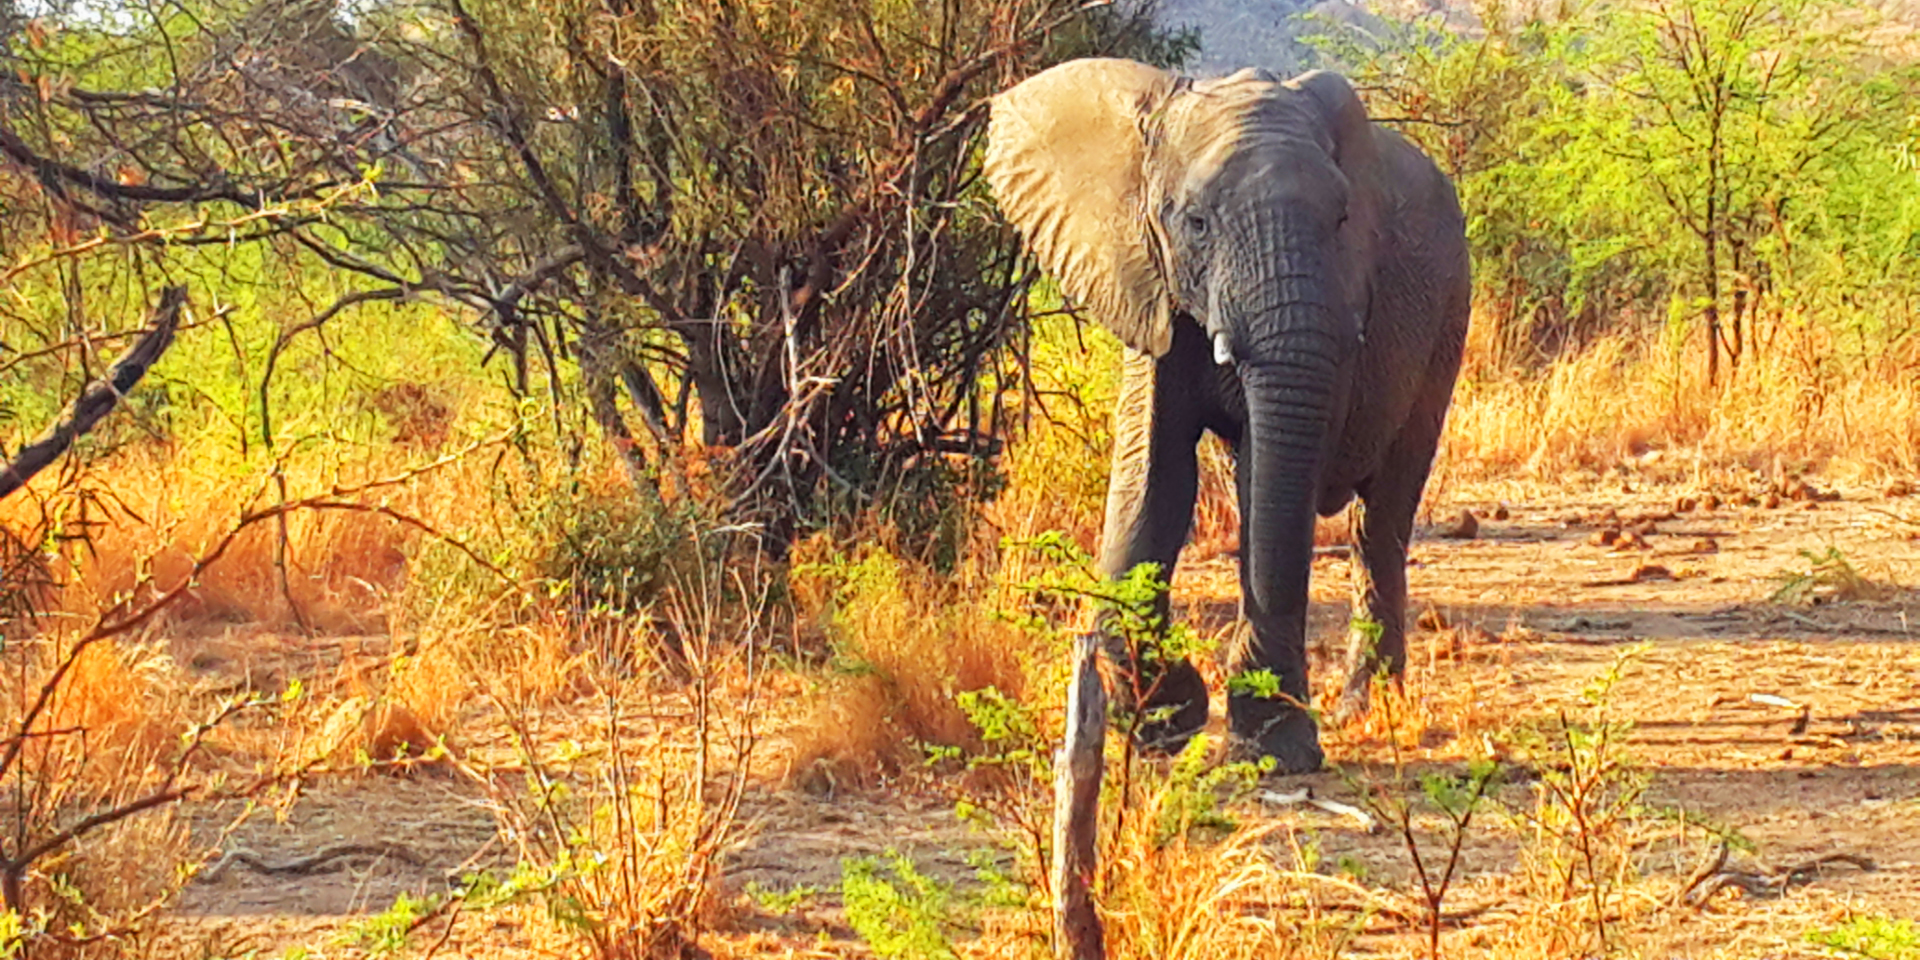 An elephant walking alone through a savanna amongst several small trees.